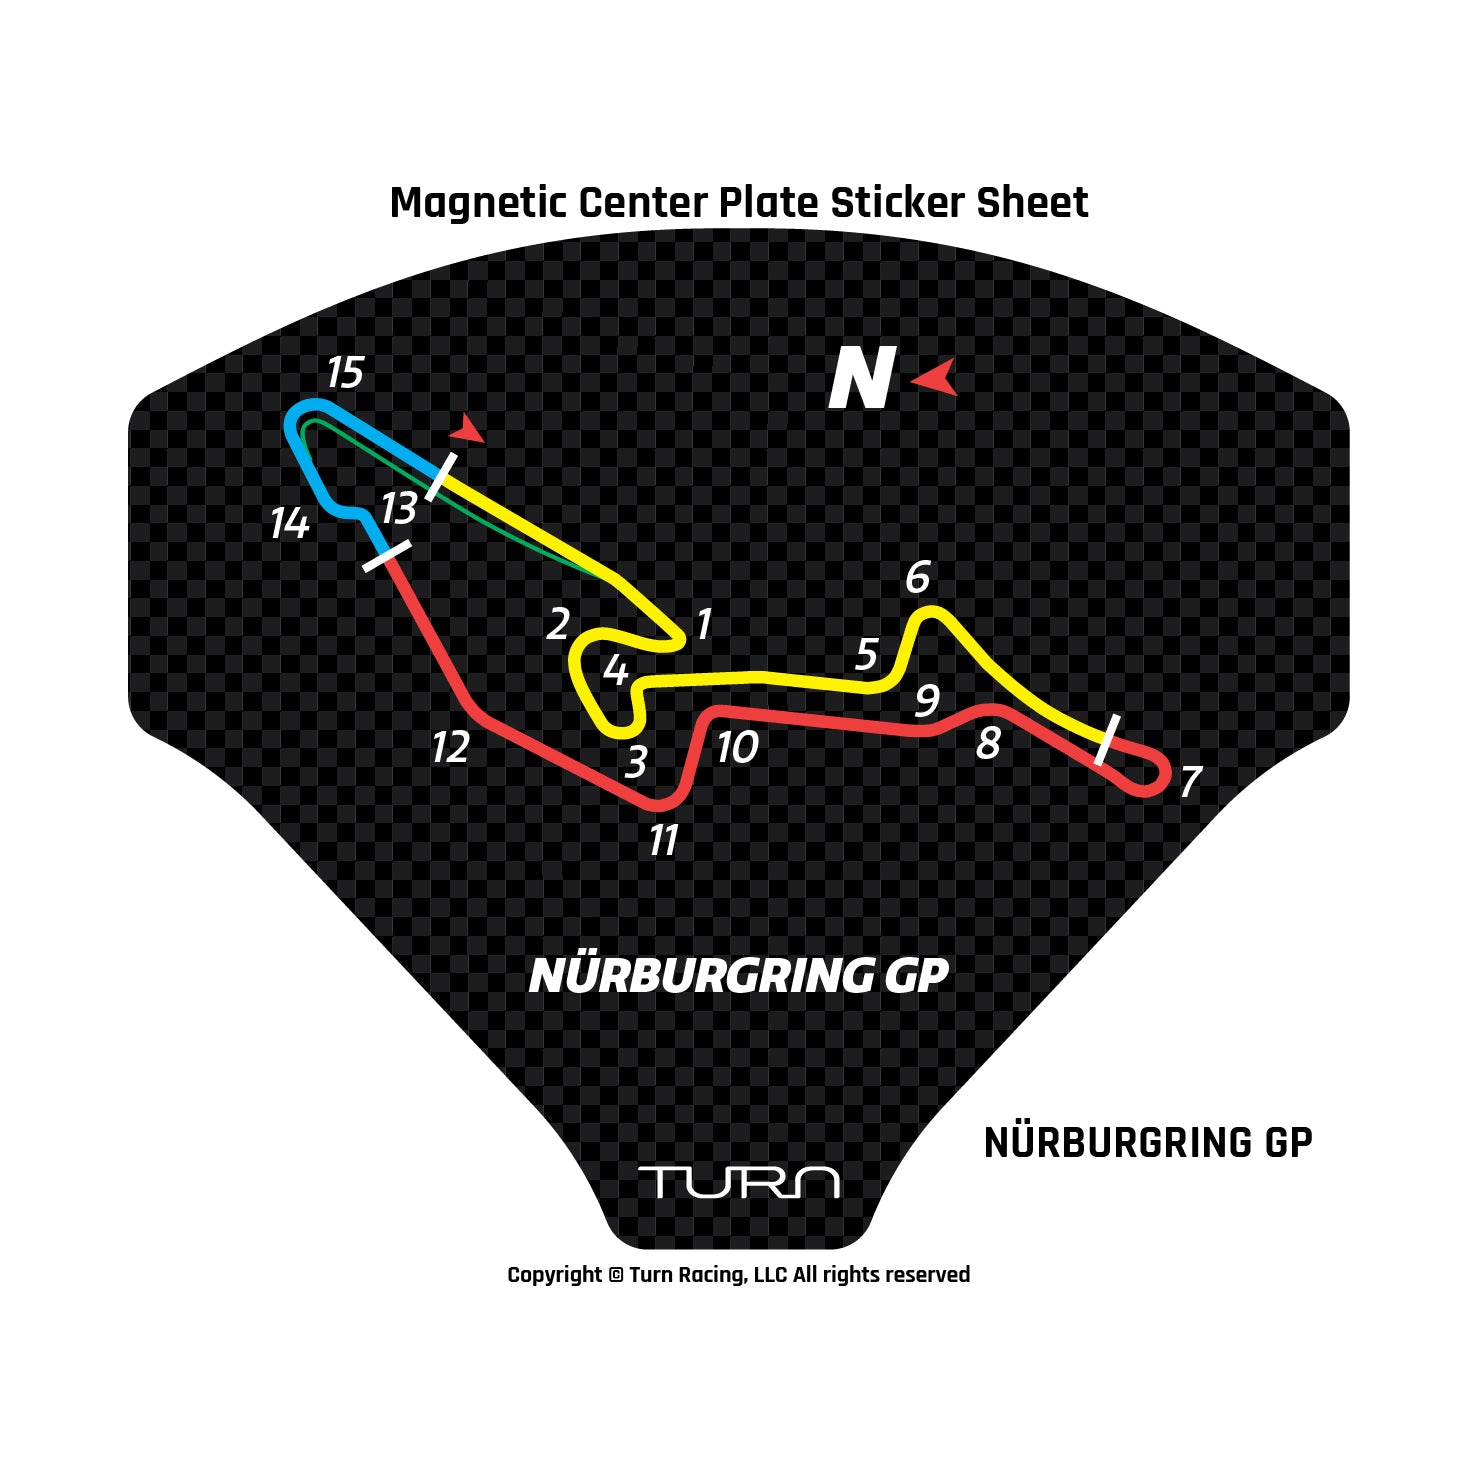 Turn Racing MCP Sticker Sheet